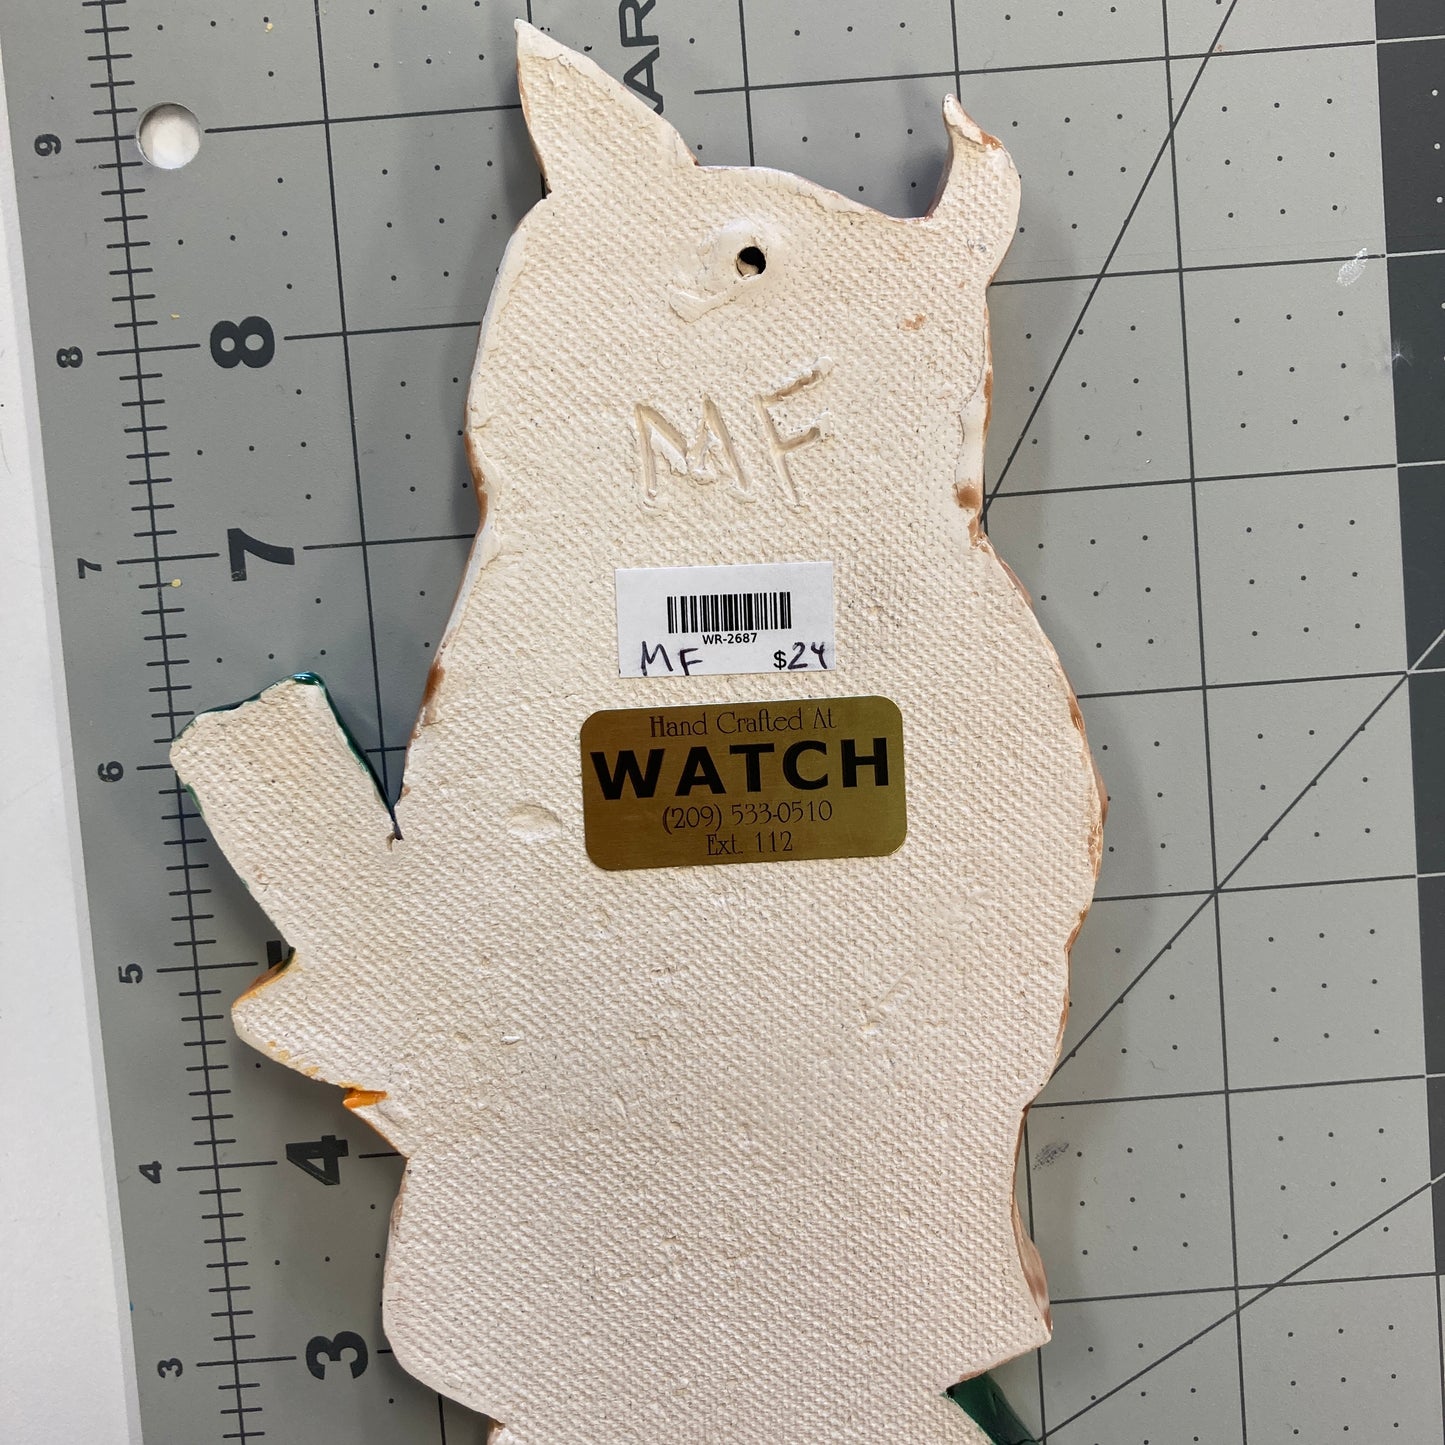 WATCH Resources Art Guild - Ceramic Arts Handmade Clay Crafts 8-inch x 5-inch Glazed Owl made by Morgan Fox